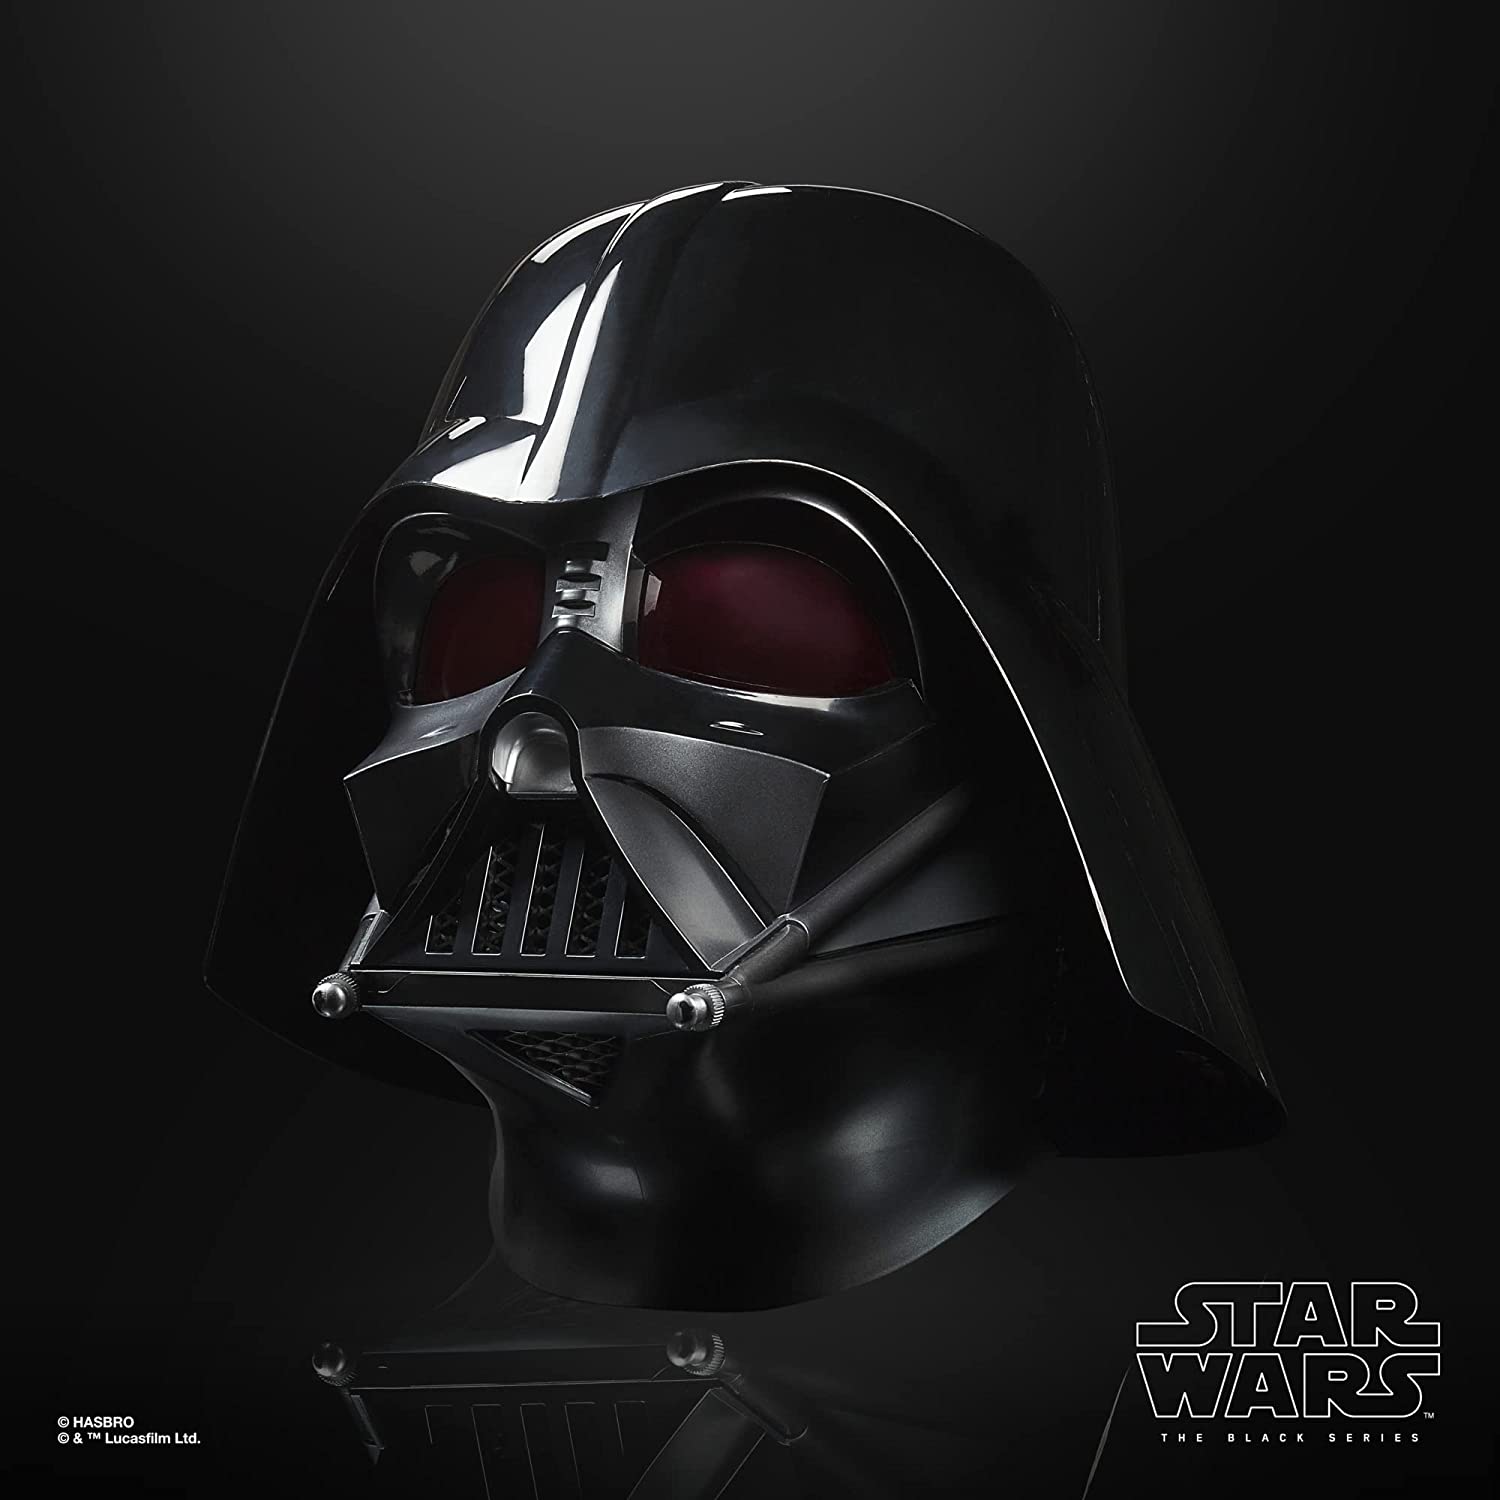 Star Wars: The Black Series Darth Vader Helmet And Obi Wan Lightsaber Are Up For Preorder